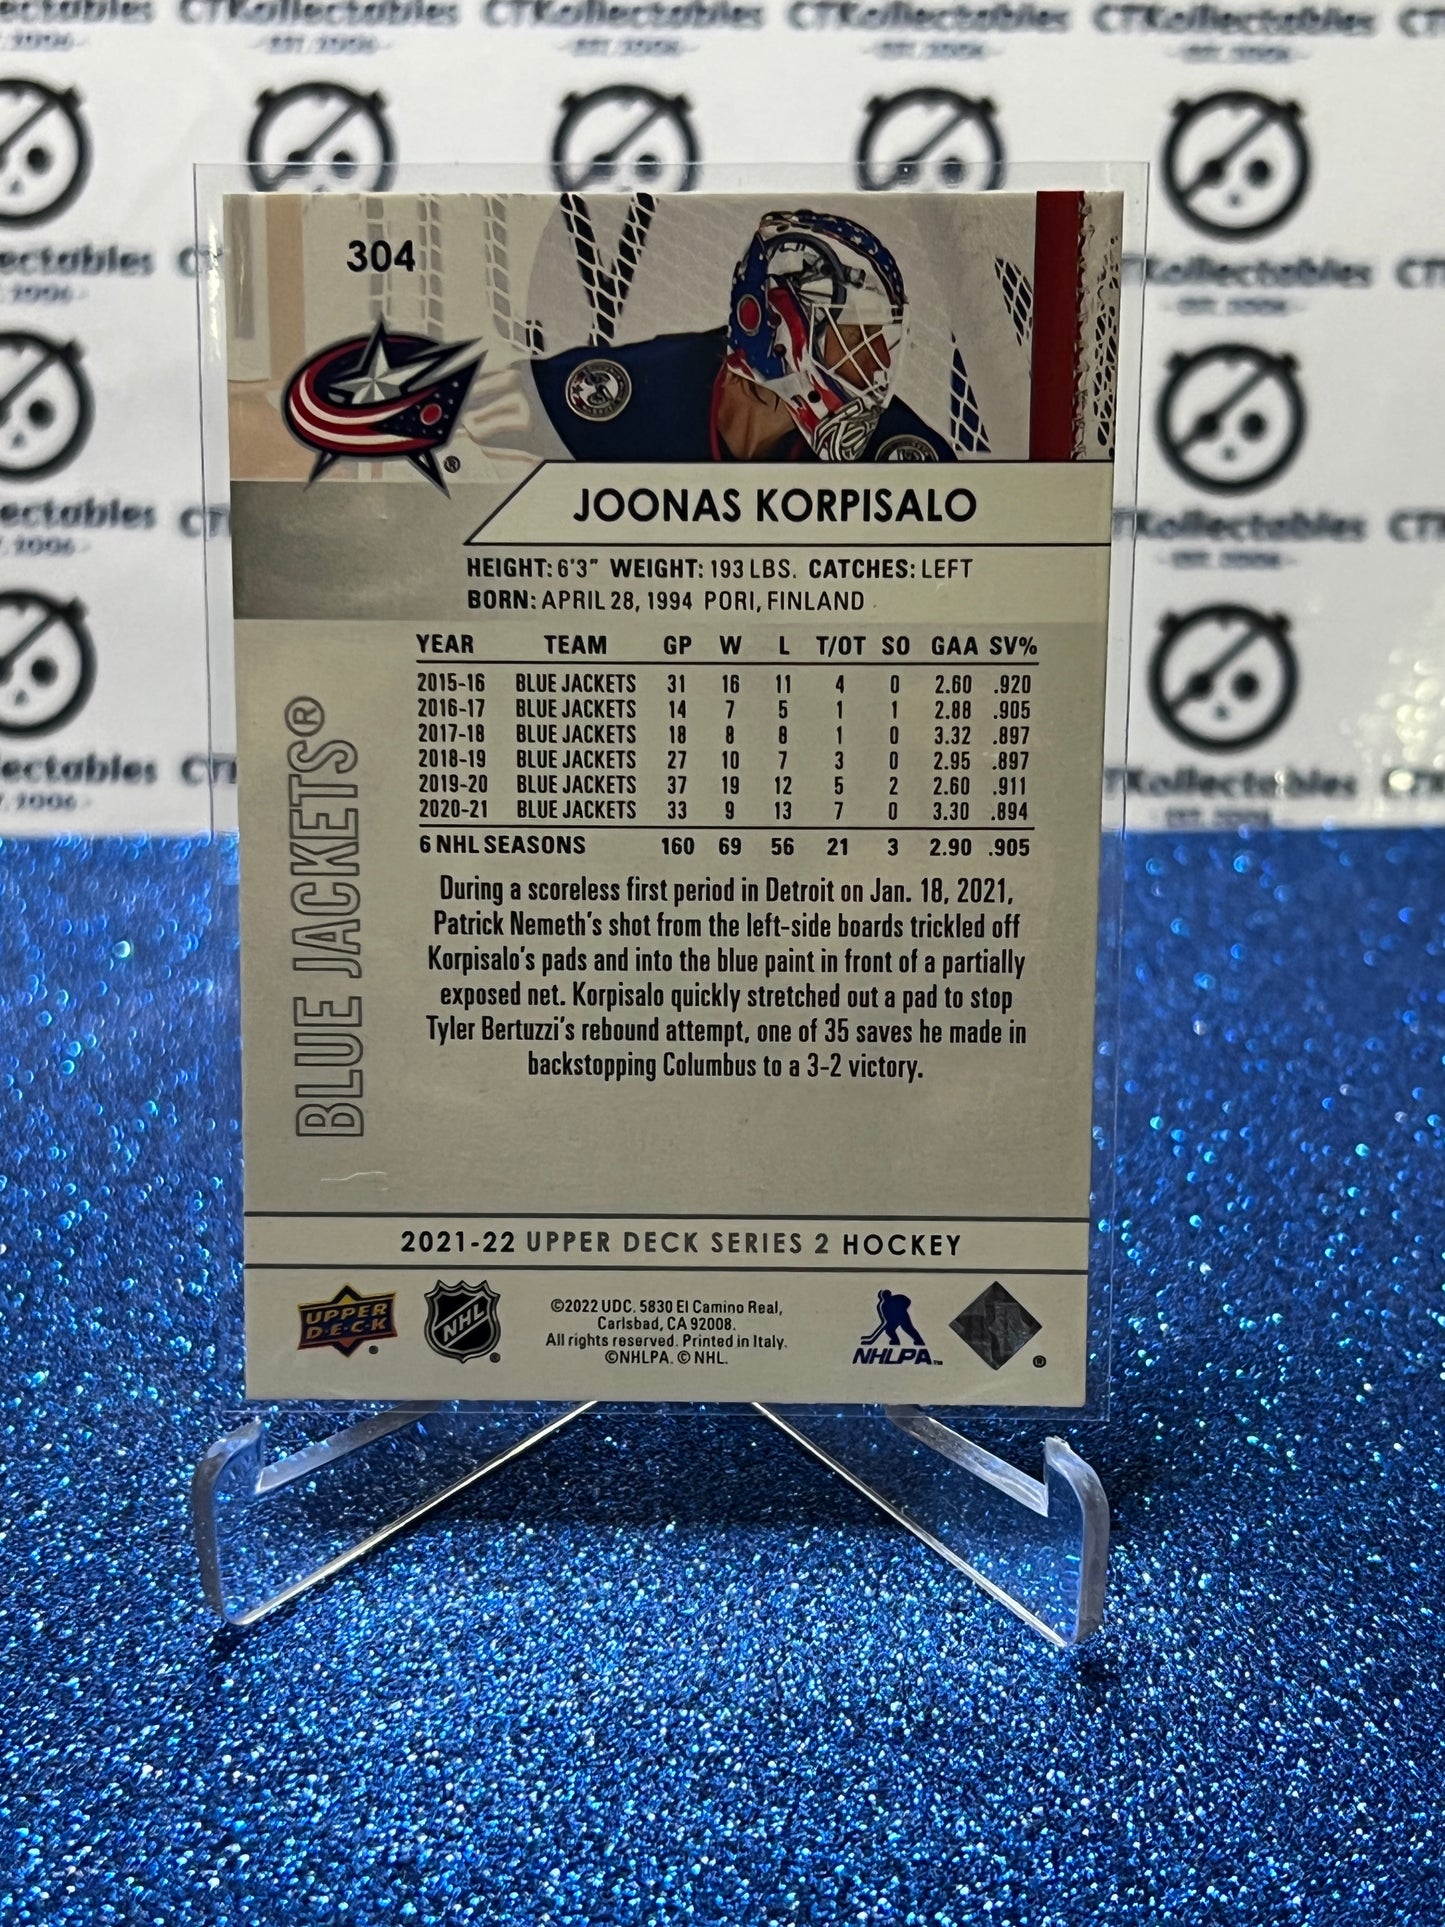 2021-22 UPPER DECK JOONAS KORPISALO # 304 COLUMBUS BLUE JACKETS HOCKEY CARD